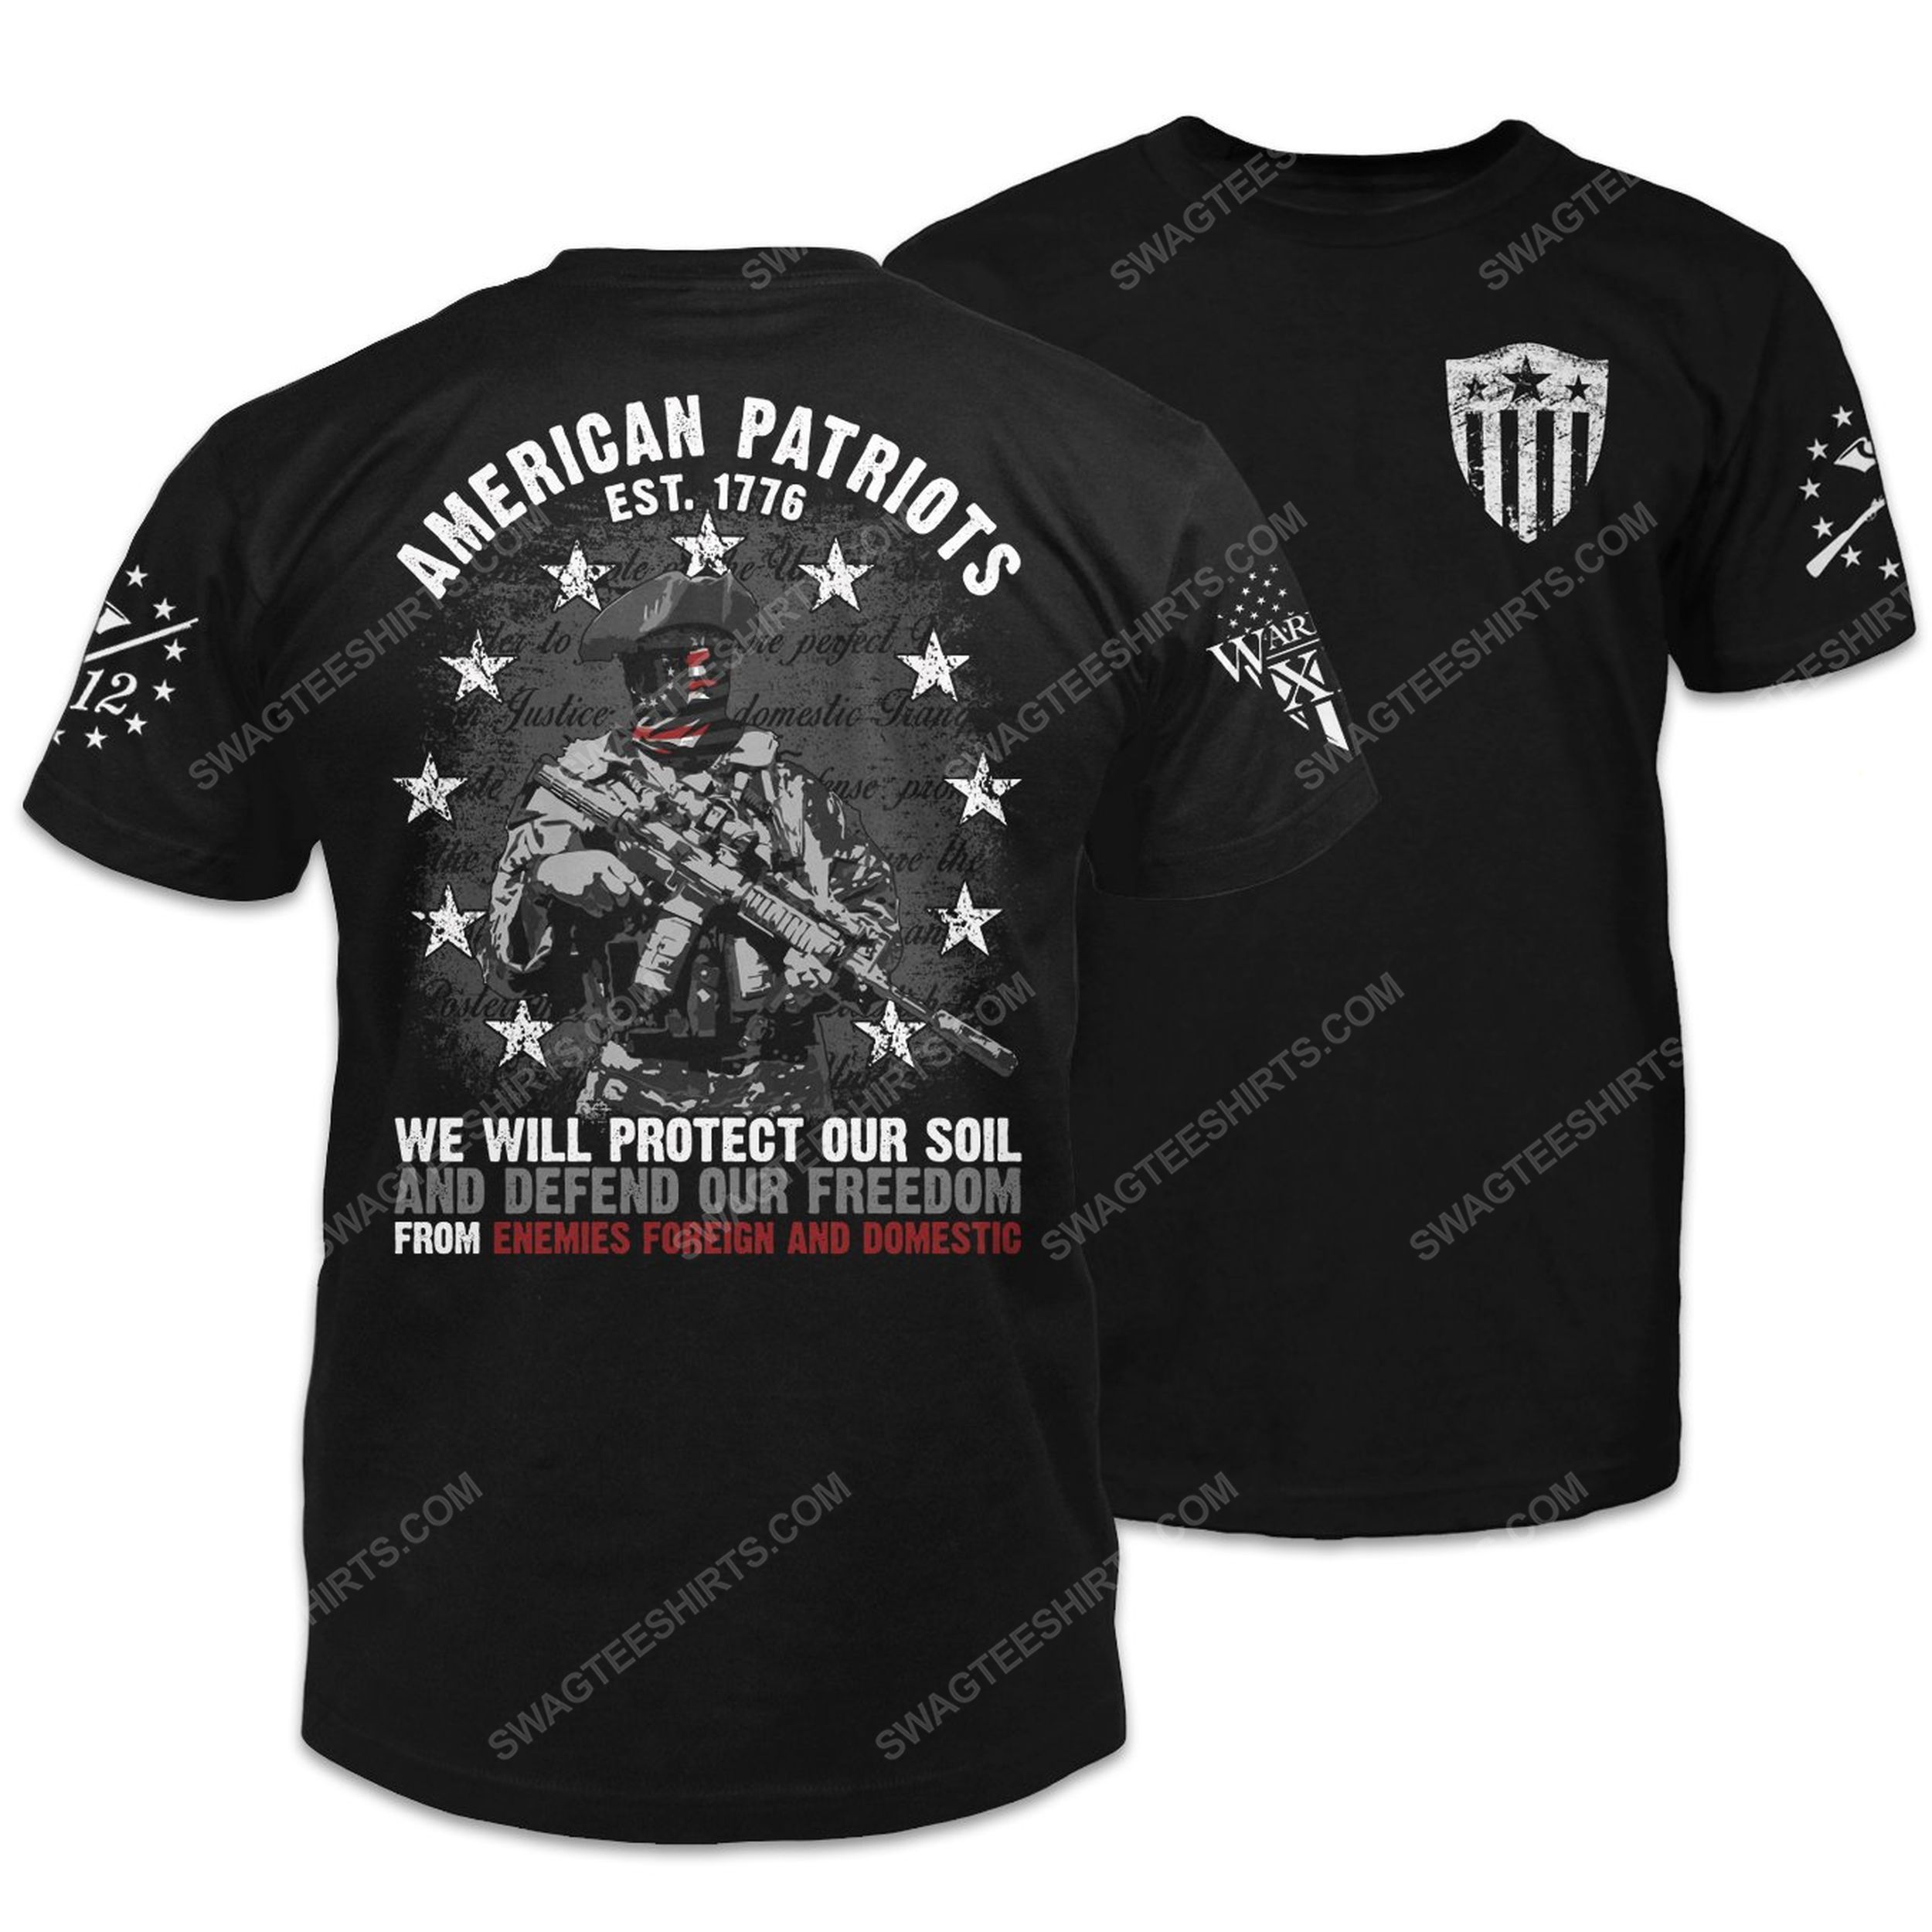 [special edition] American patriots revolutionary war soldier shirt – maria